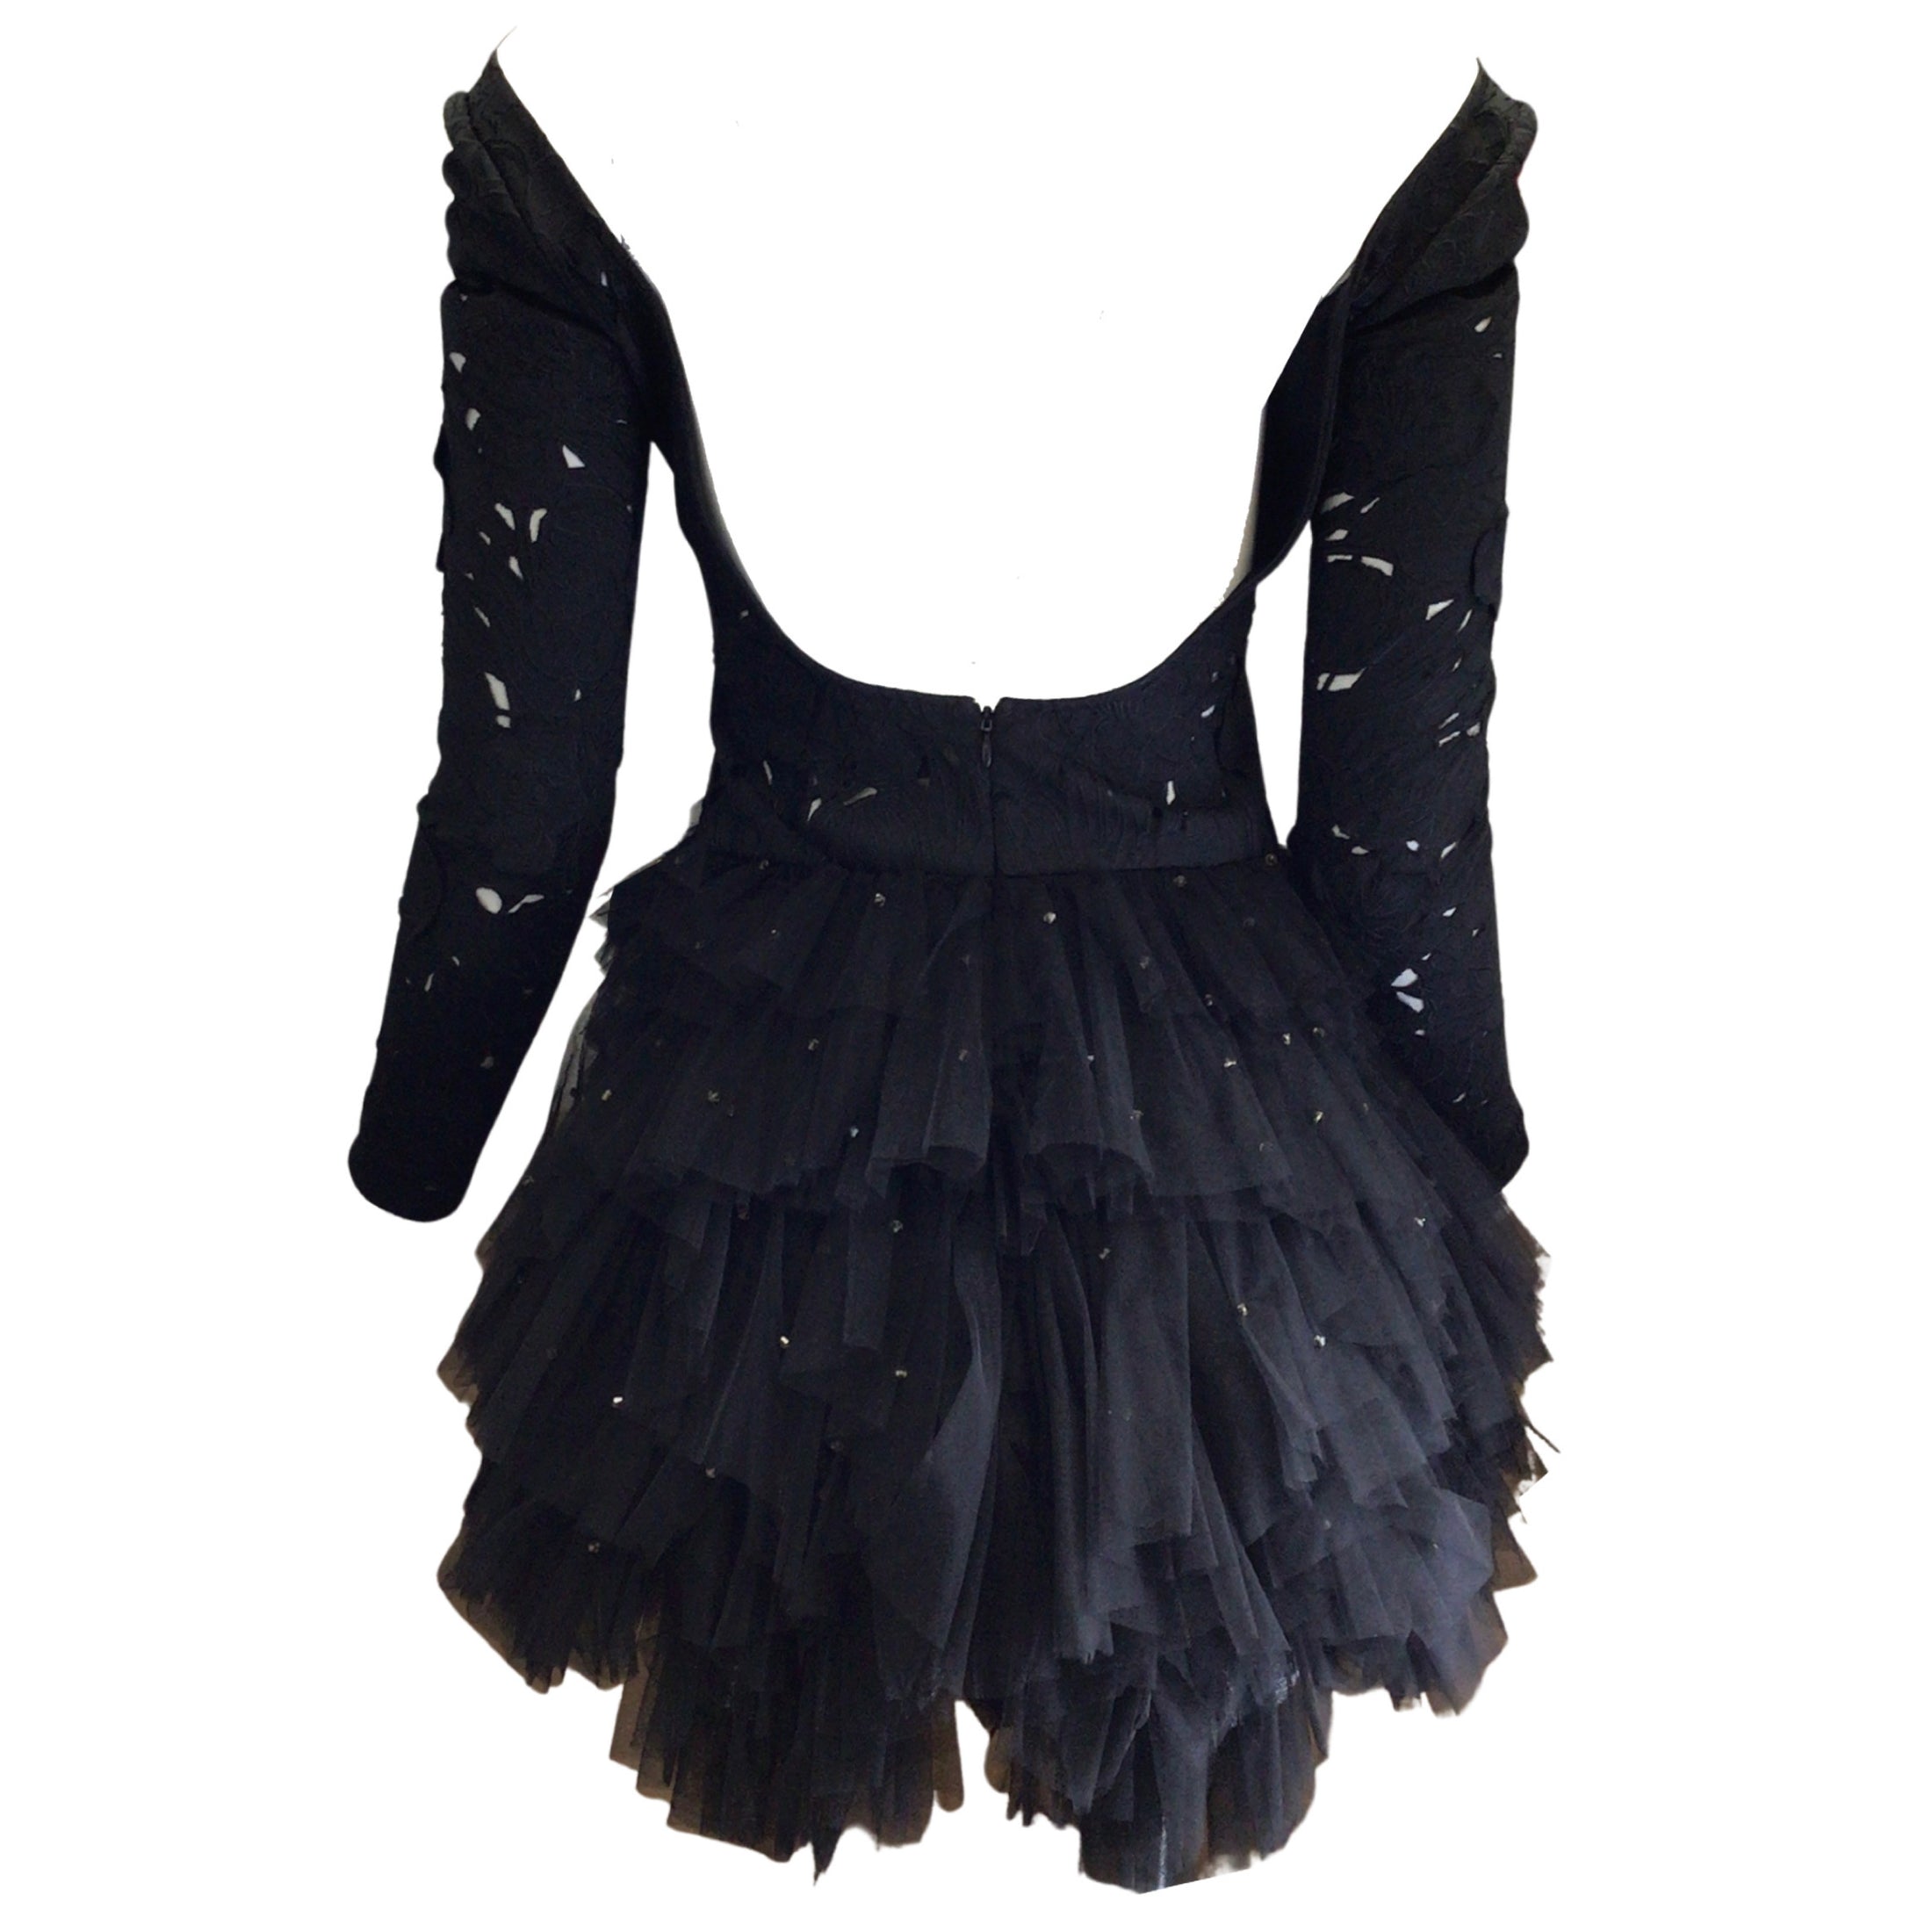 Leo Lin Black Rhinestone Embellished Mesh Tulle Skirt Floral Lace Mini Dress